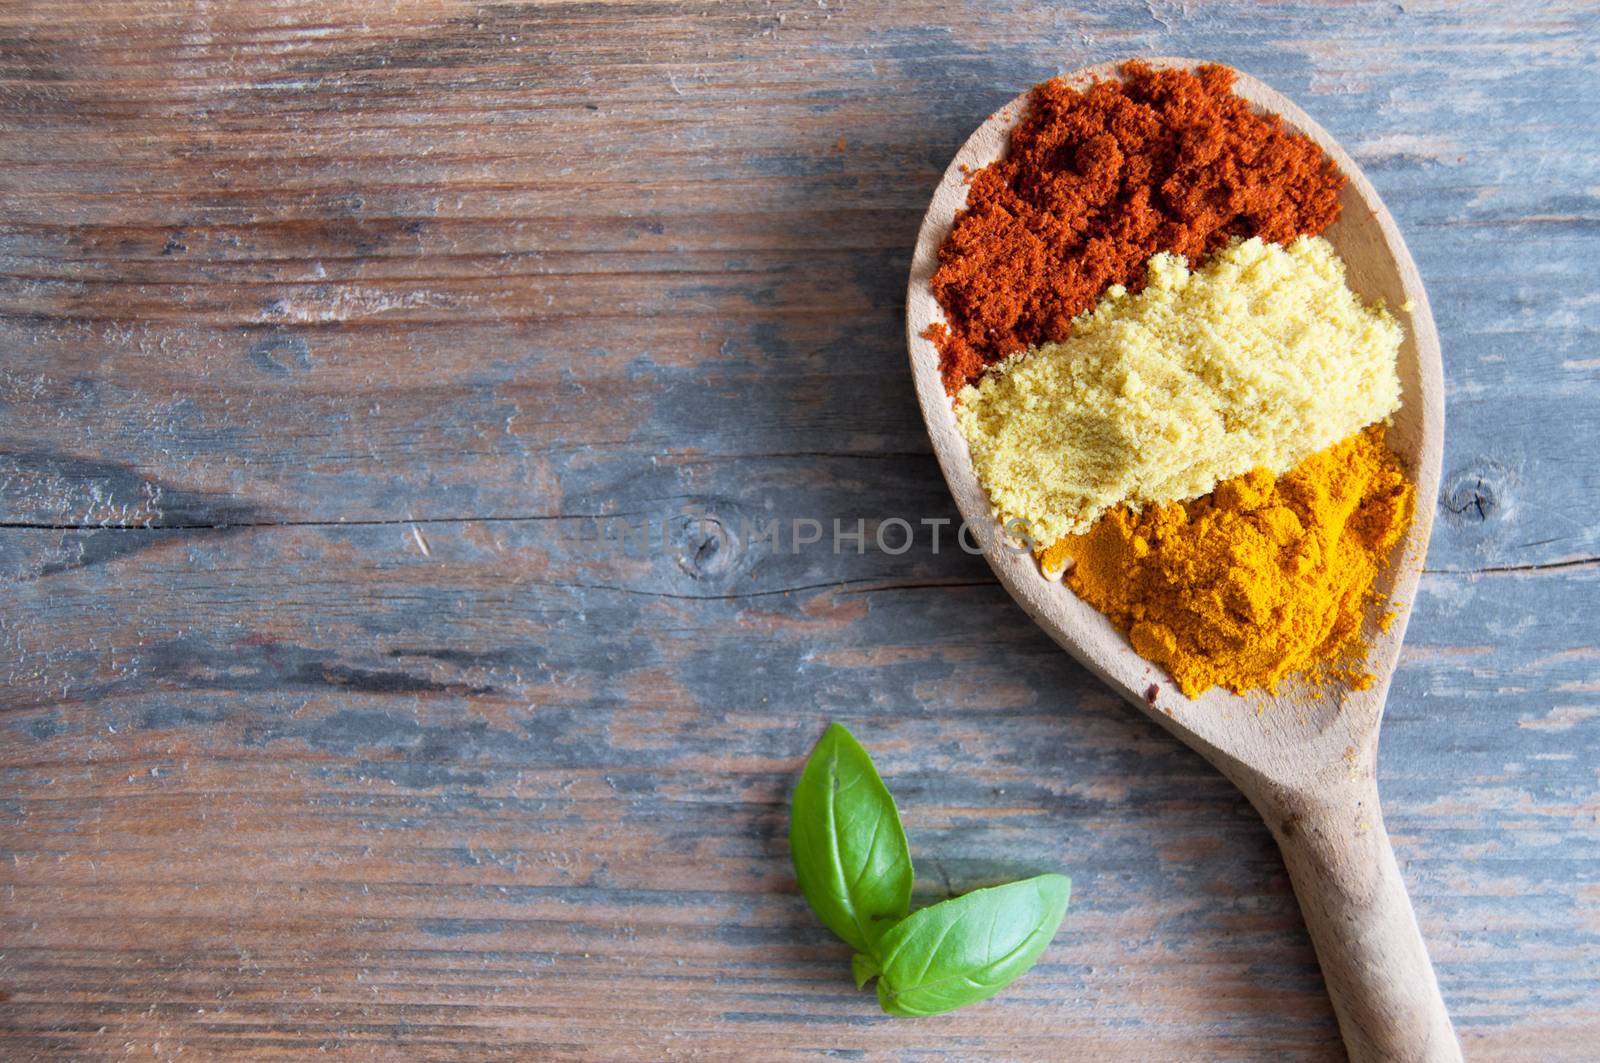 Spice herb seasoning background by unikpix